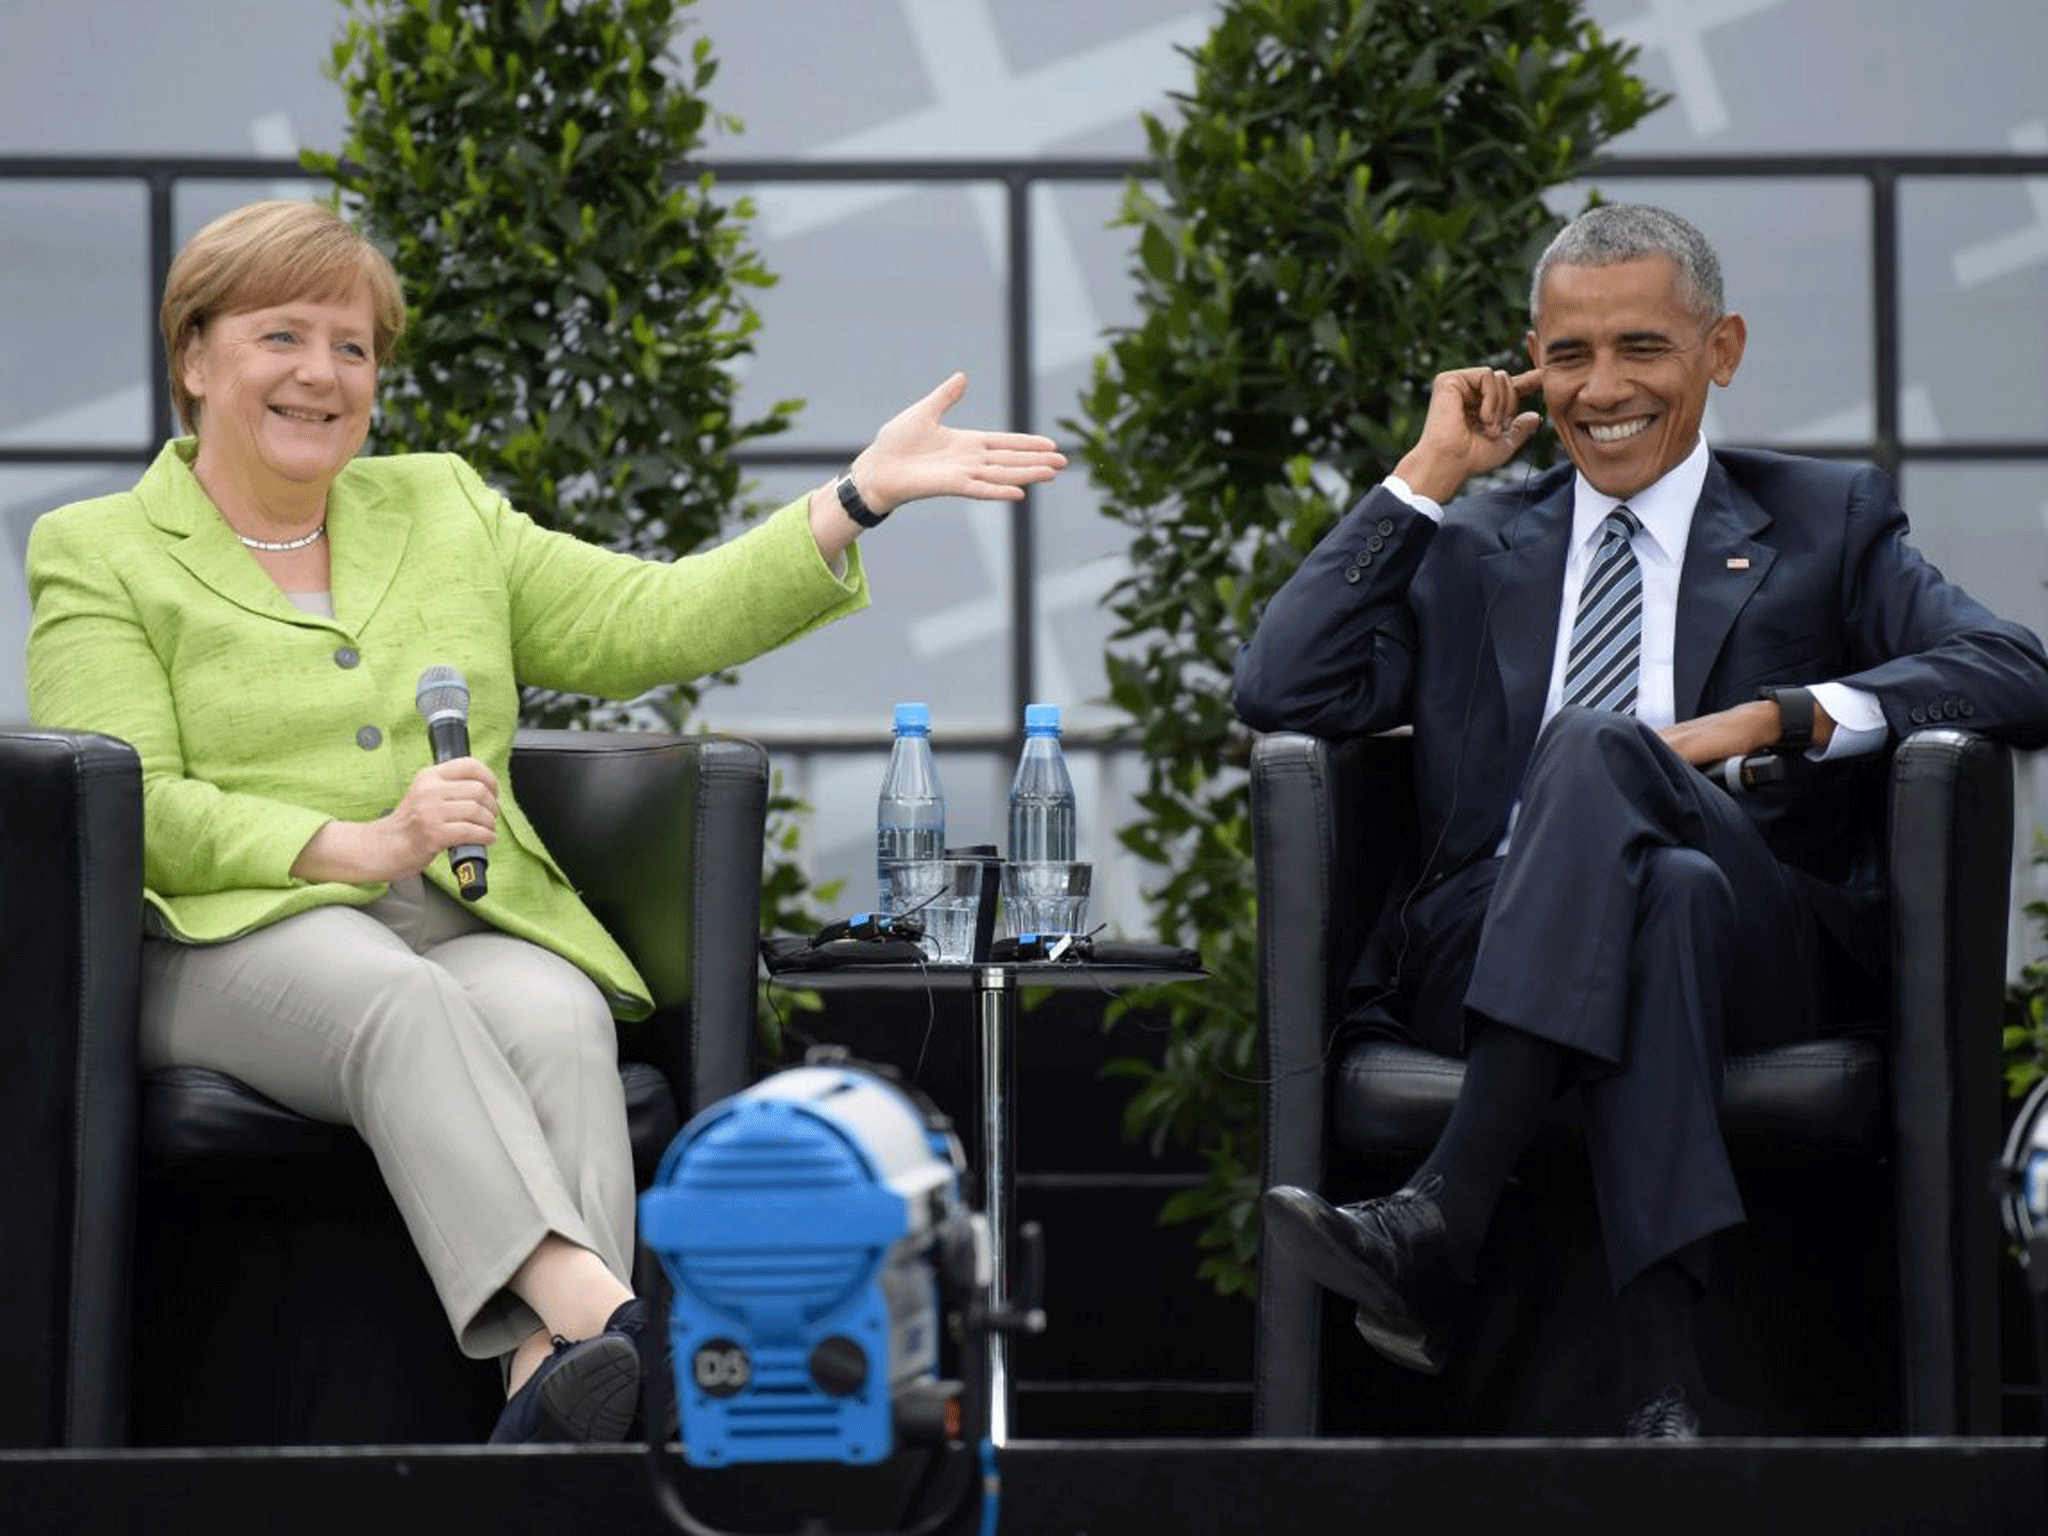 Angela Merkel and Barack Obama speaking in Berlin